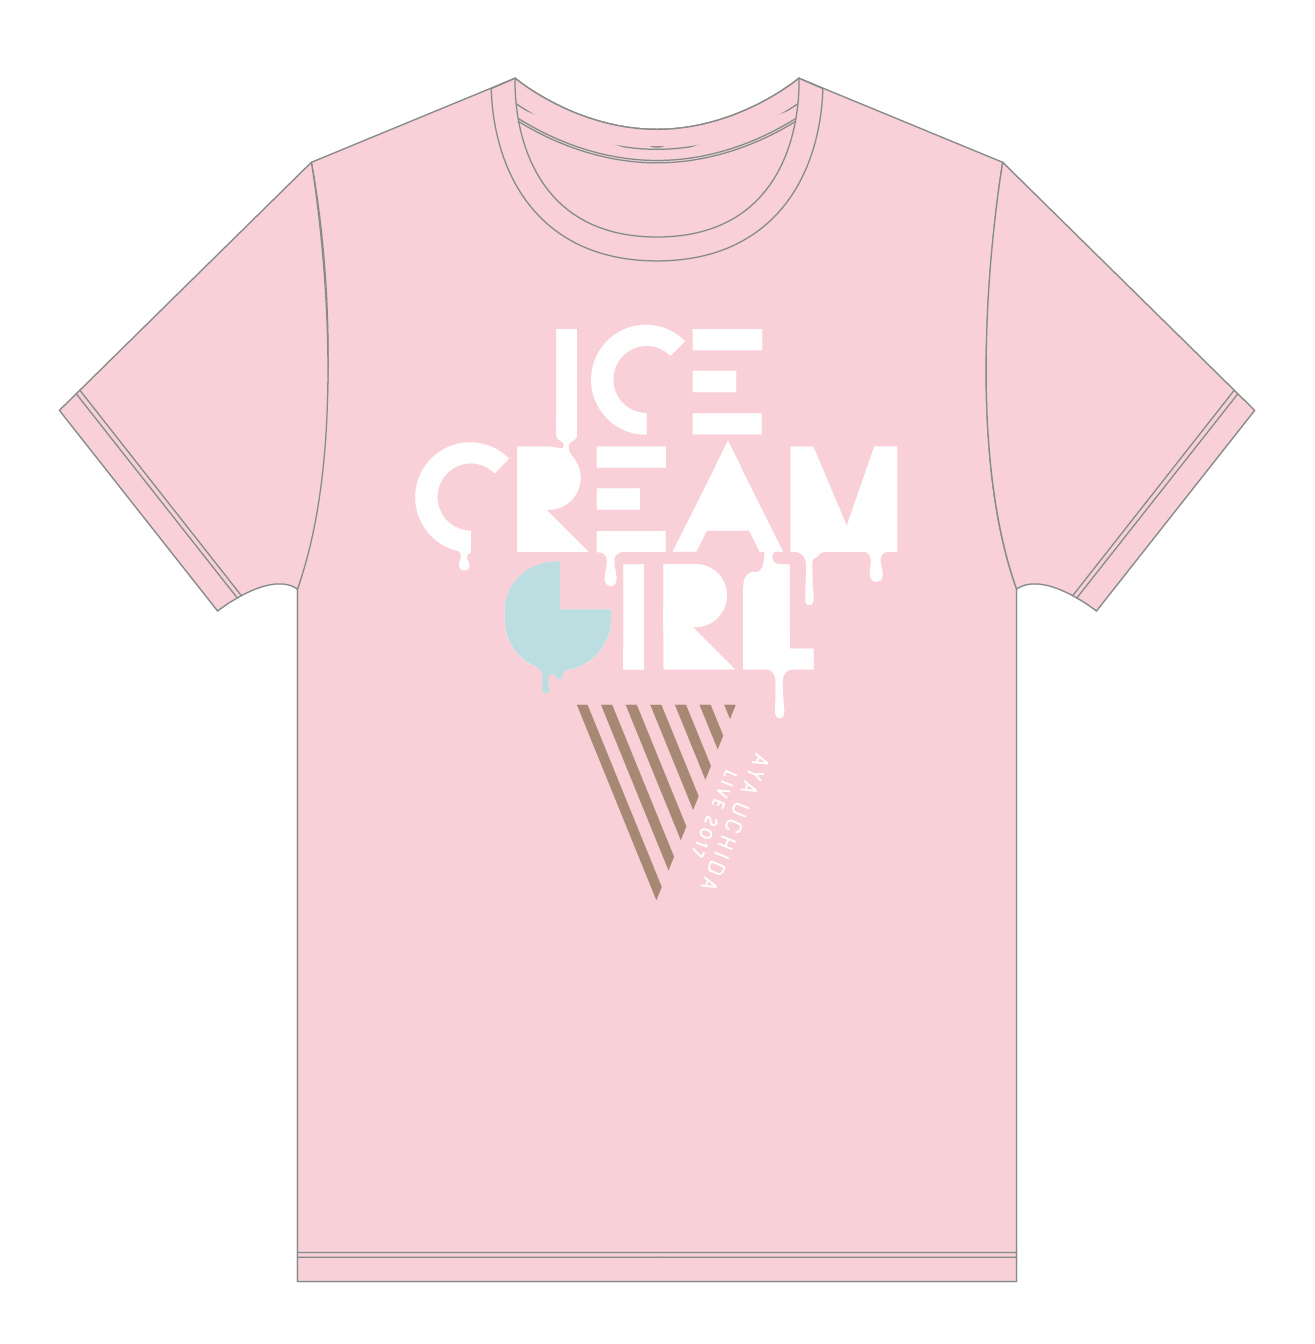 AYA UCHIDA LIVE2017 ICECREAM GIRL Tシャツ 15日ver.